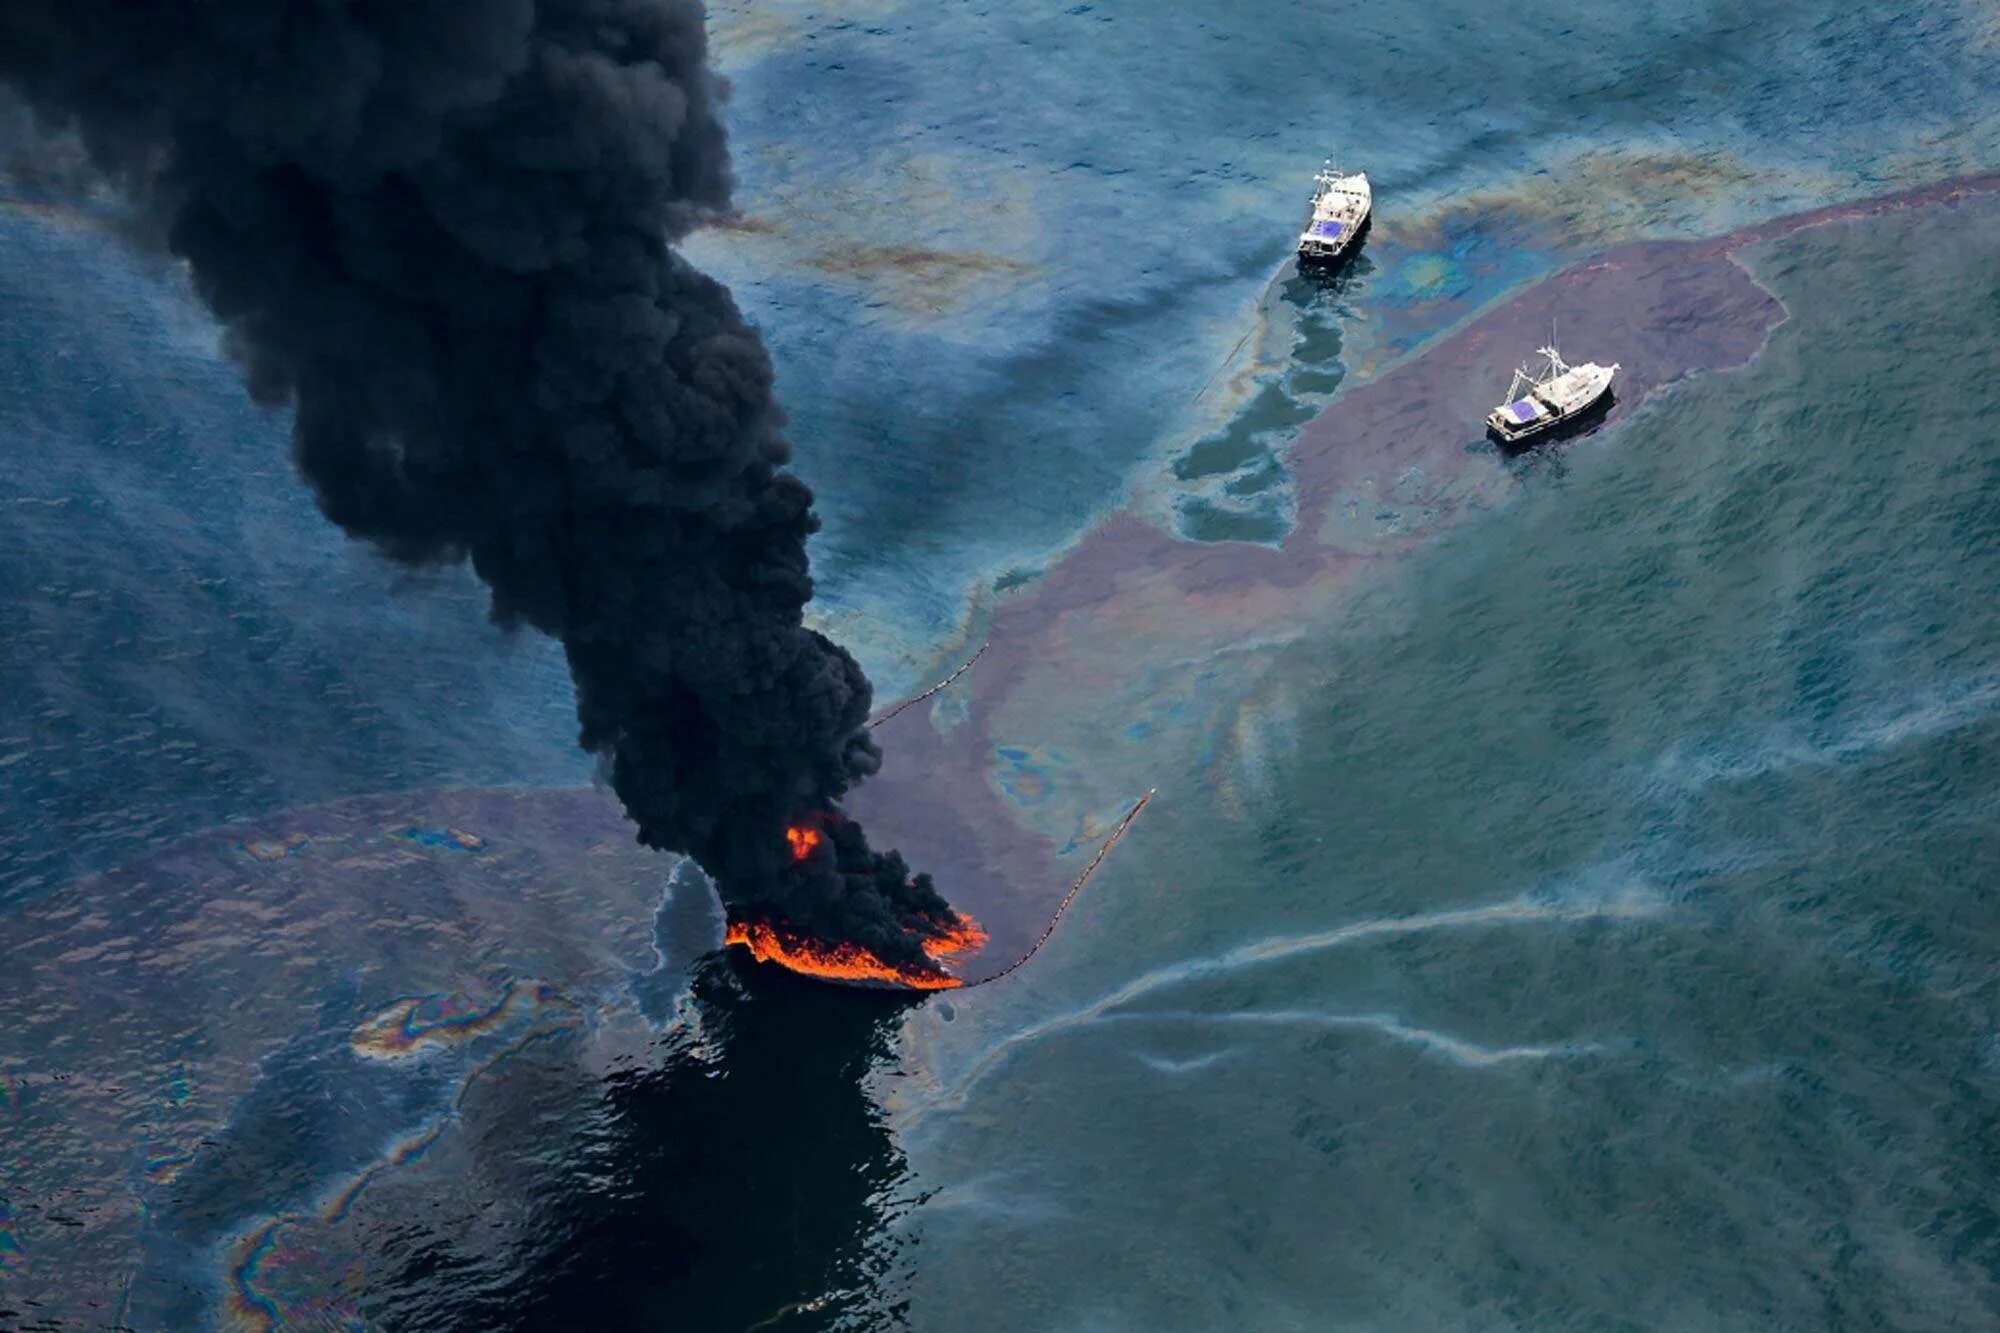 Разлив нефти в мексиканском заливе 2010. Deepwater Horizon разлив нефти. Взрыв нефтяной платформы Deepwater Horizon 2010. Катастрофа Deepwater Horizon в мексиканском заливе.